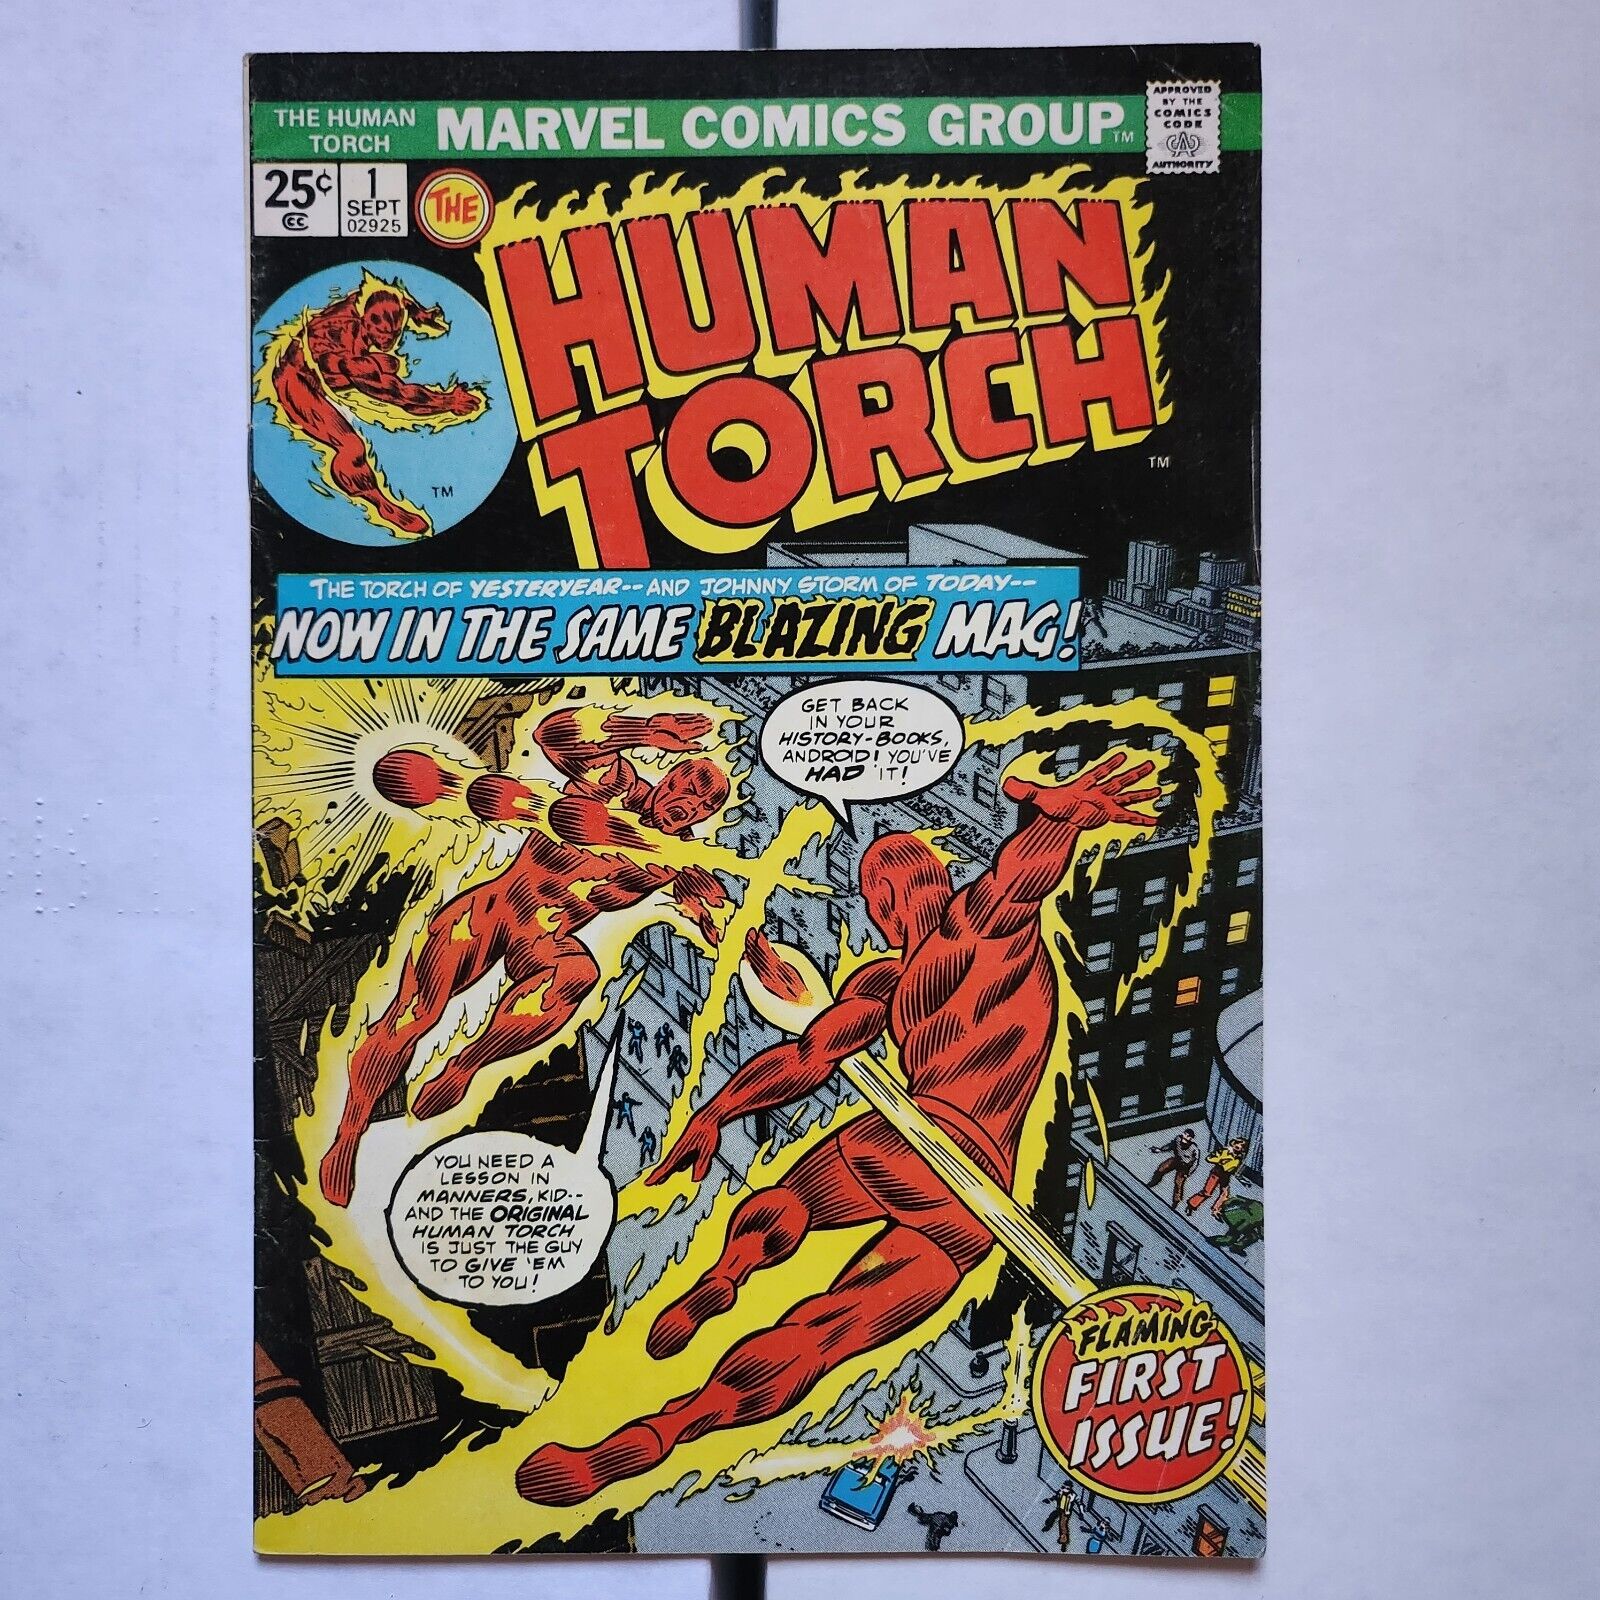 The Human Torch #1 (1974) - Marvel Comics - Stan Lee, Jack Kirby, John Romita